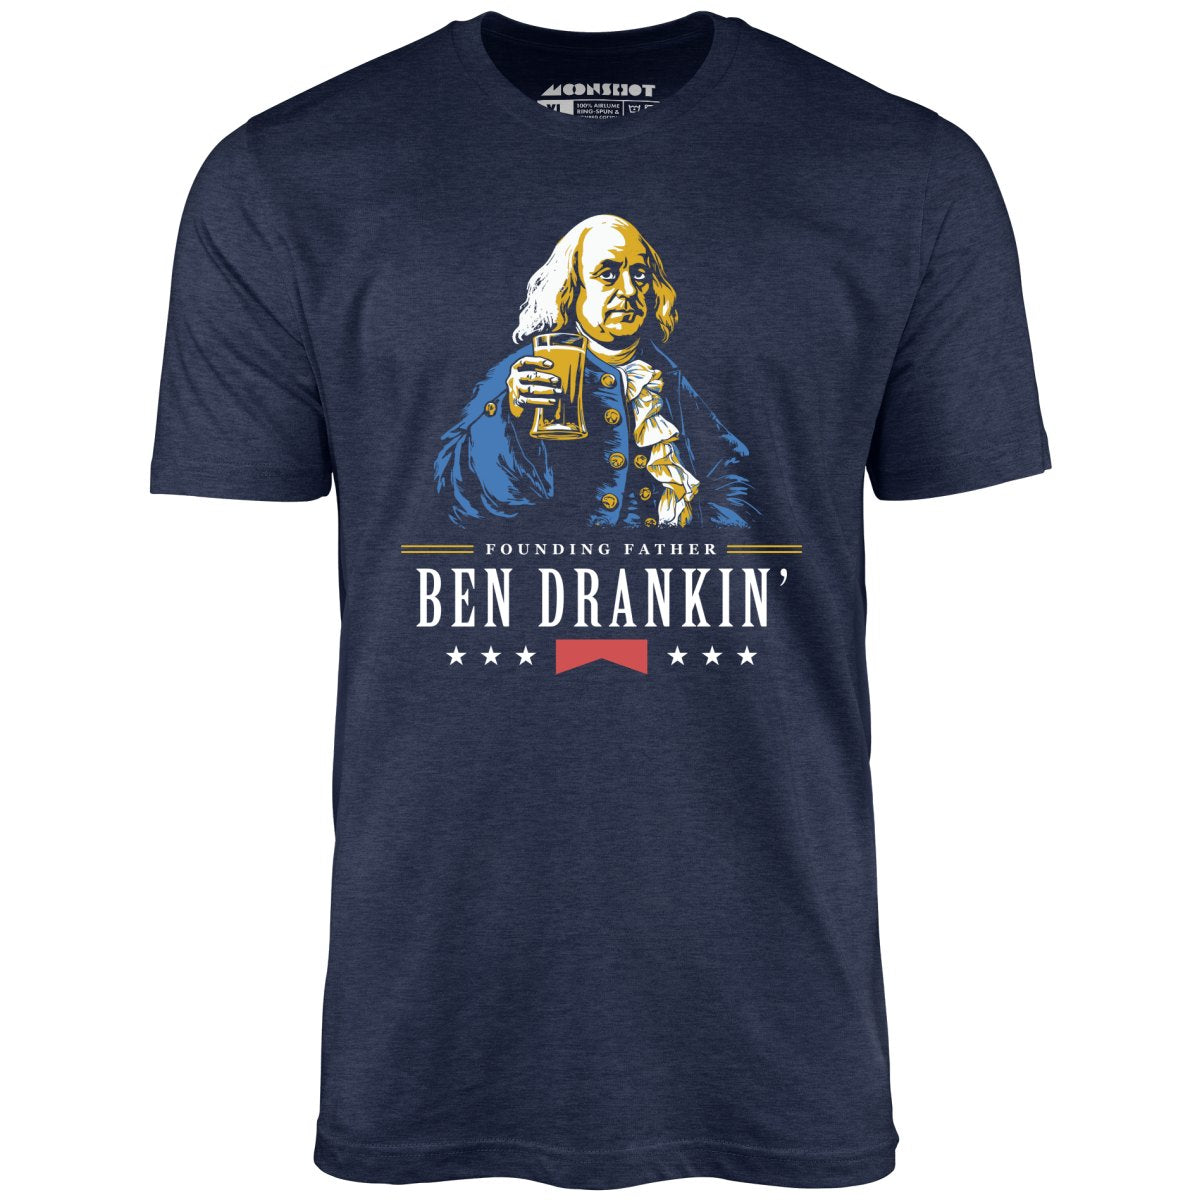 Ben Drankin' Founding Father - Unisex T-Shirt